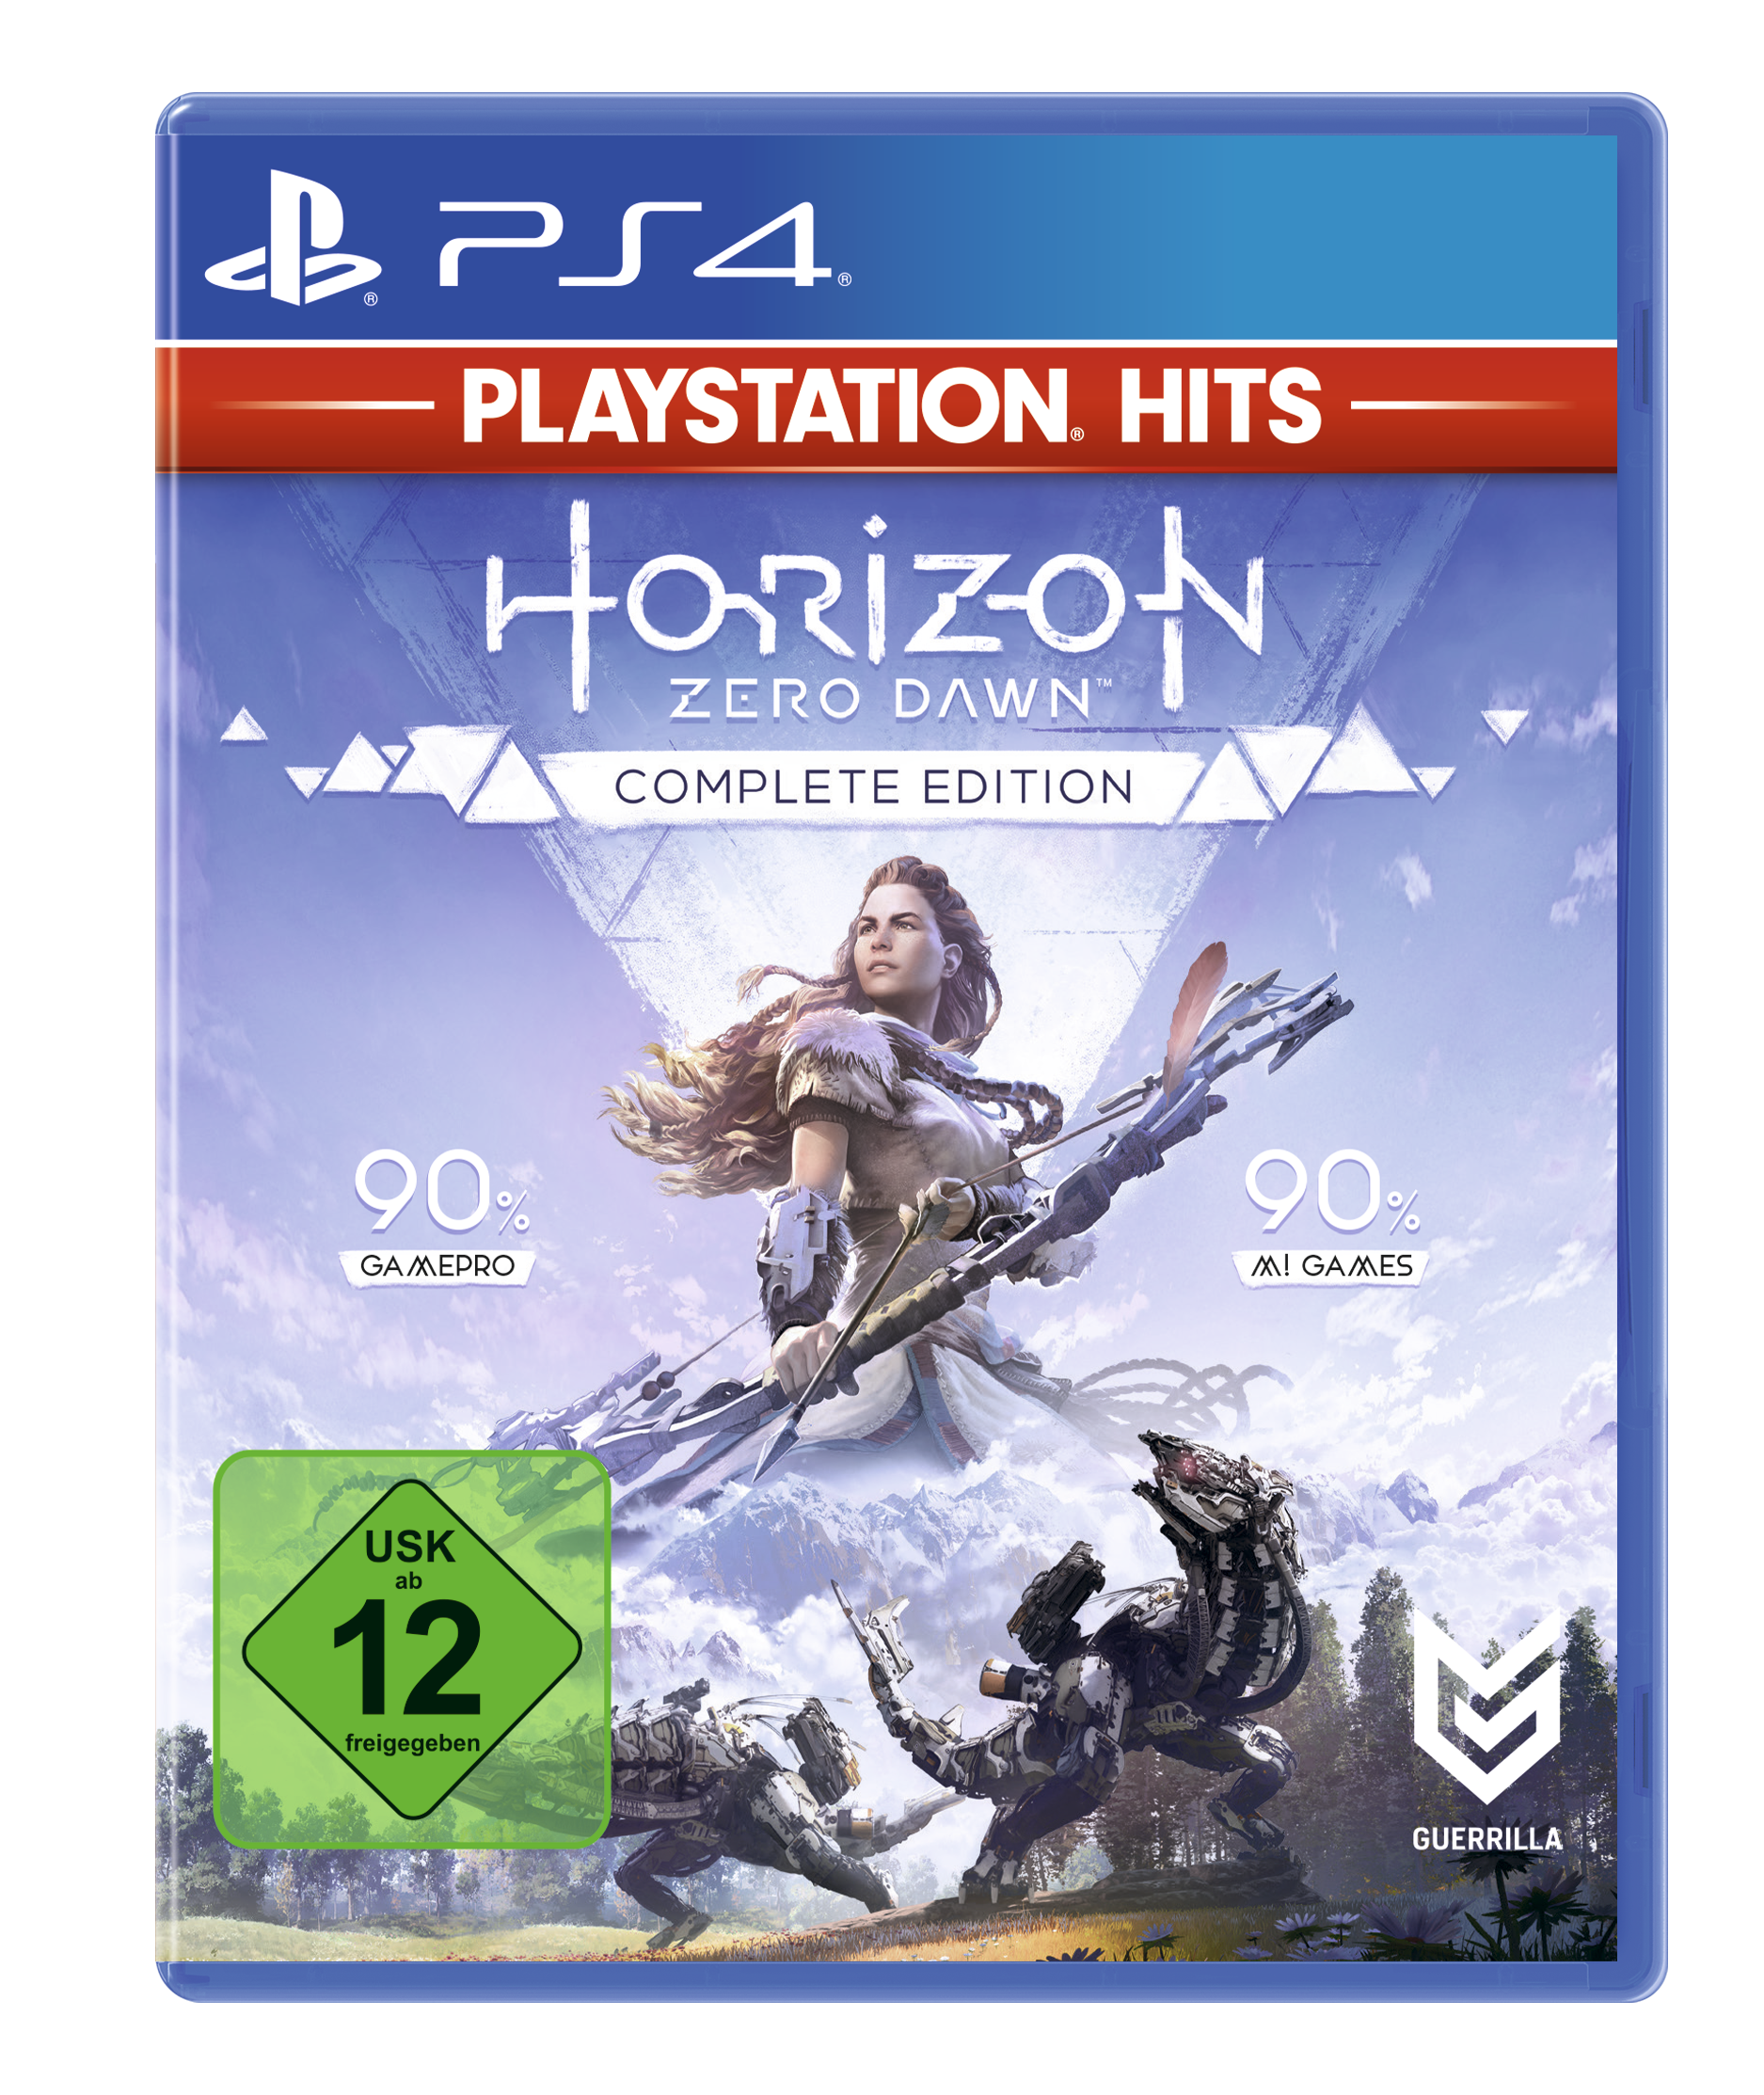 PlayStation Hits: Horizon Zero [PlayStation - Complete Edition 4] Dawn